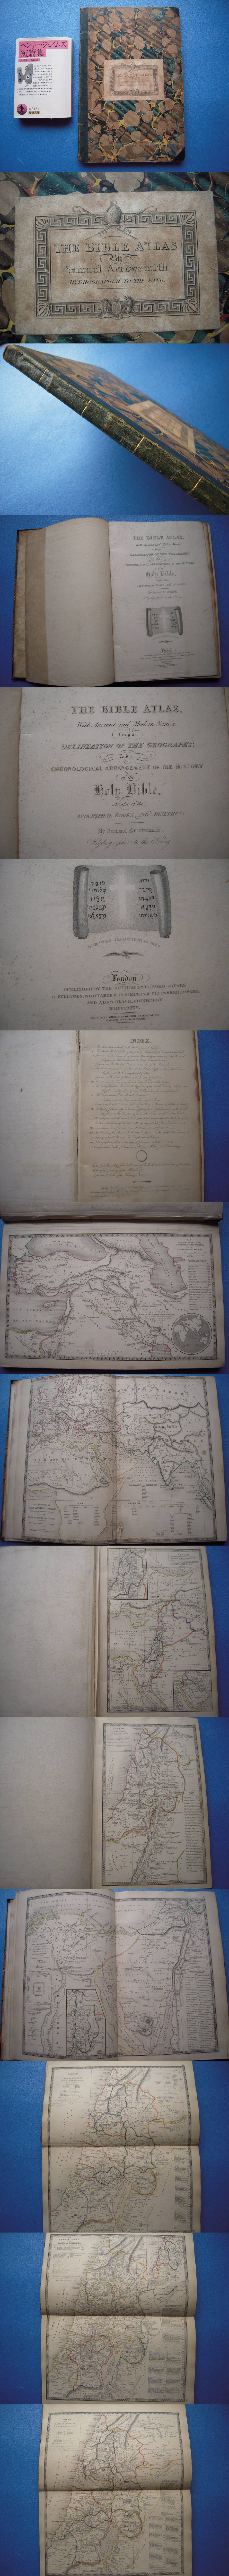 【好評大特価】「聖書地図帳 The Bible Atlas with Ancient and Modern Names 1835」 古地図